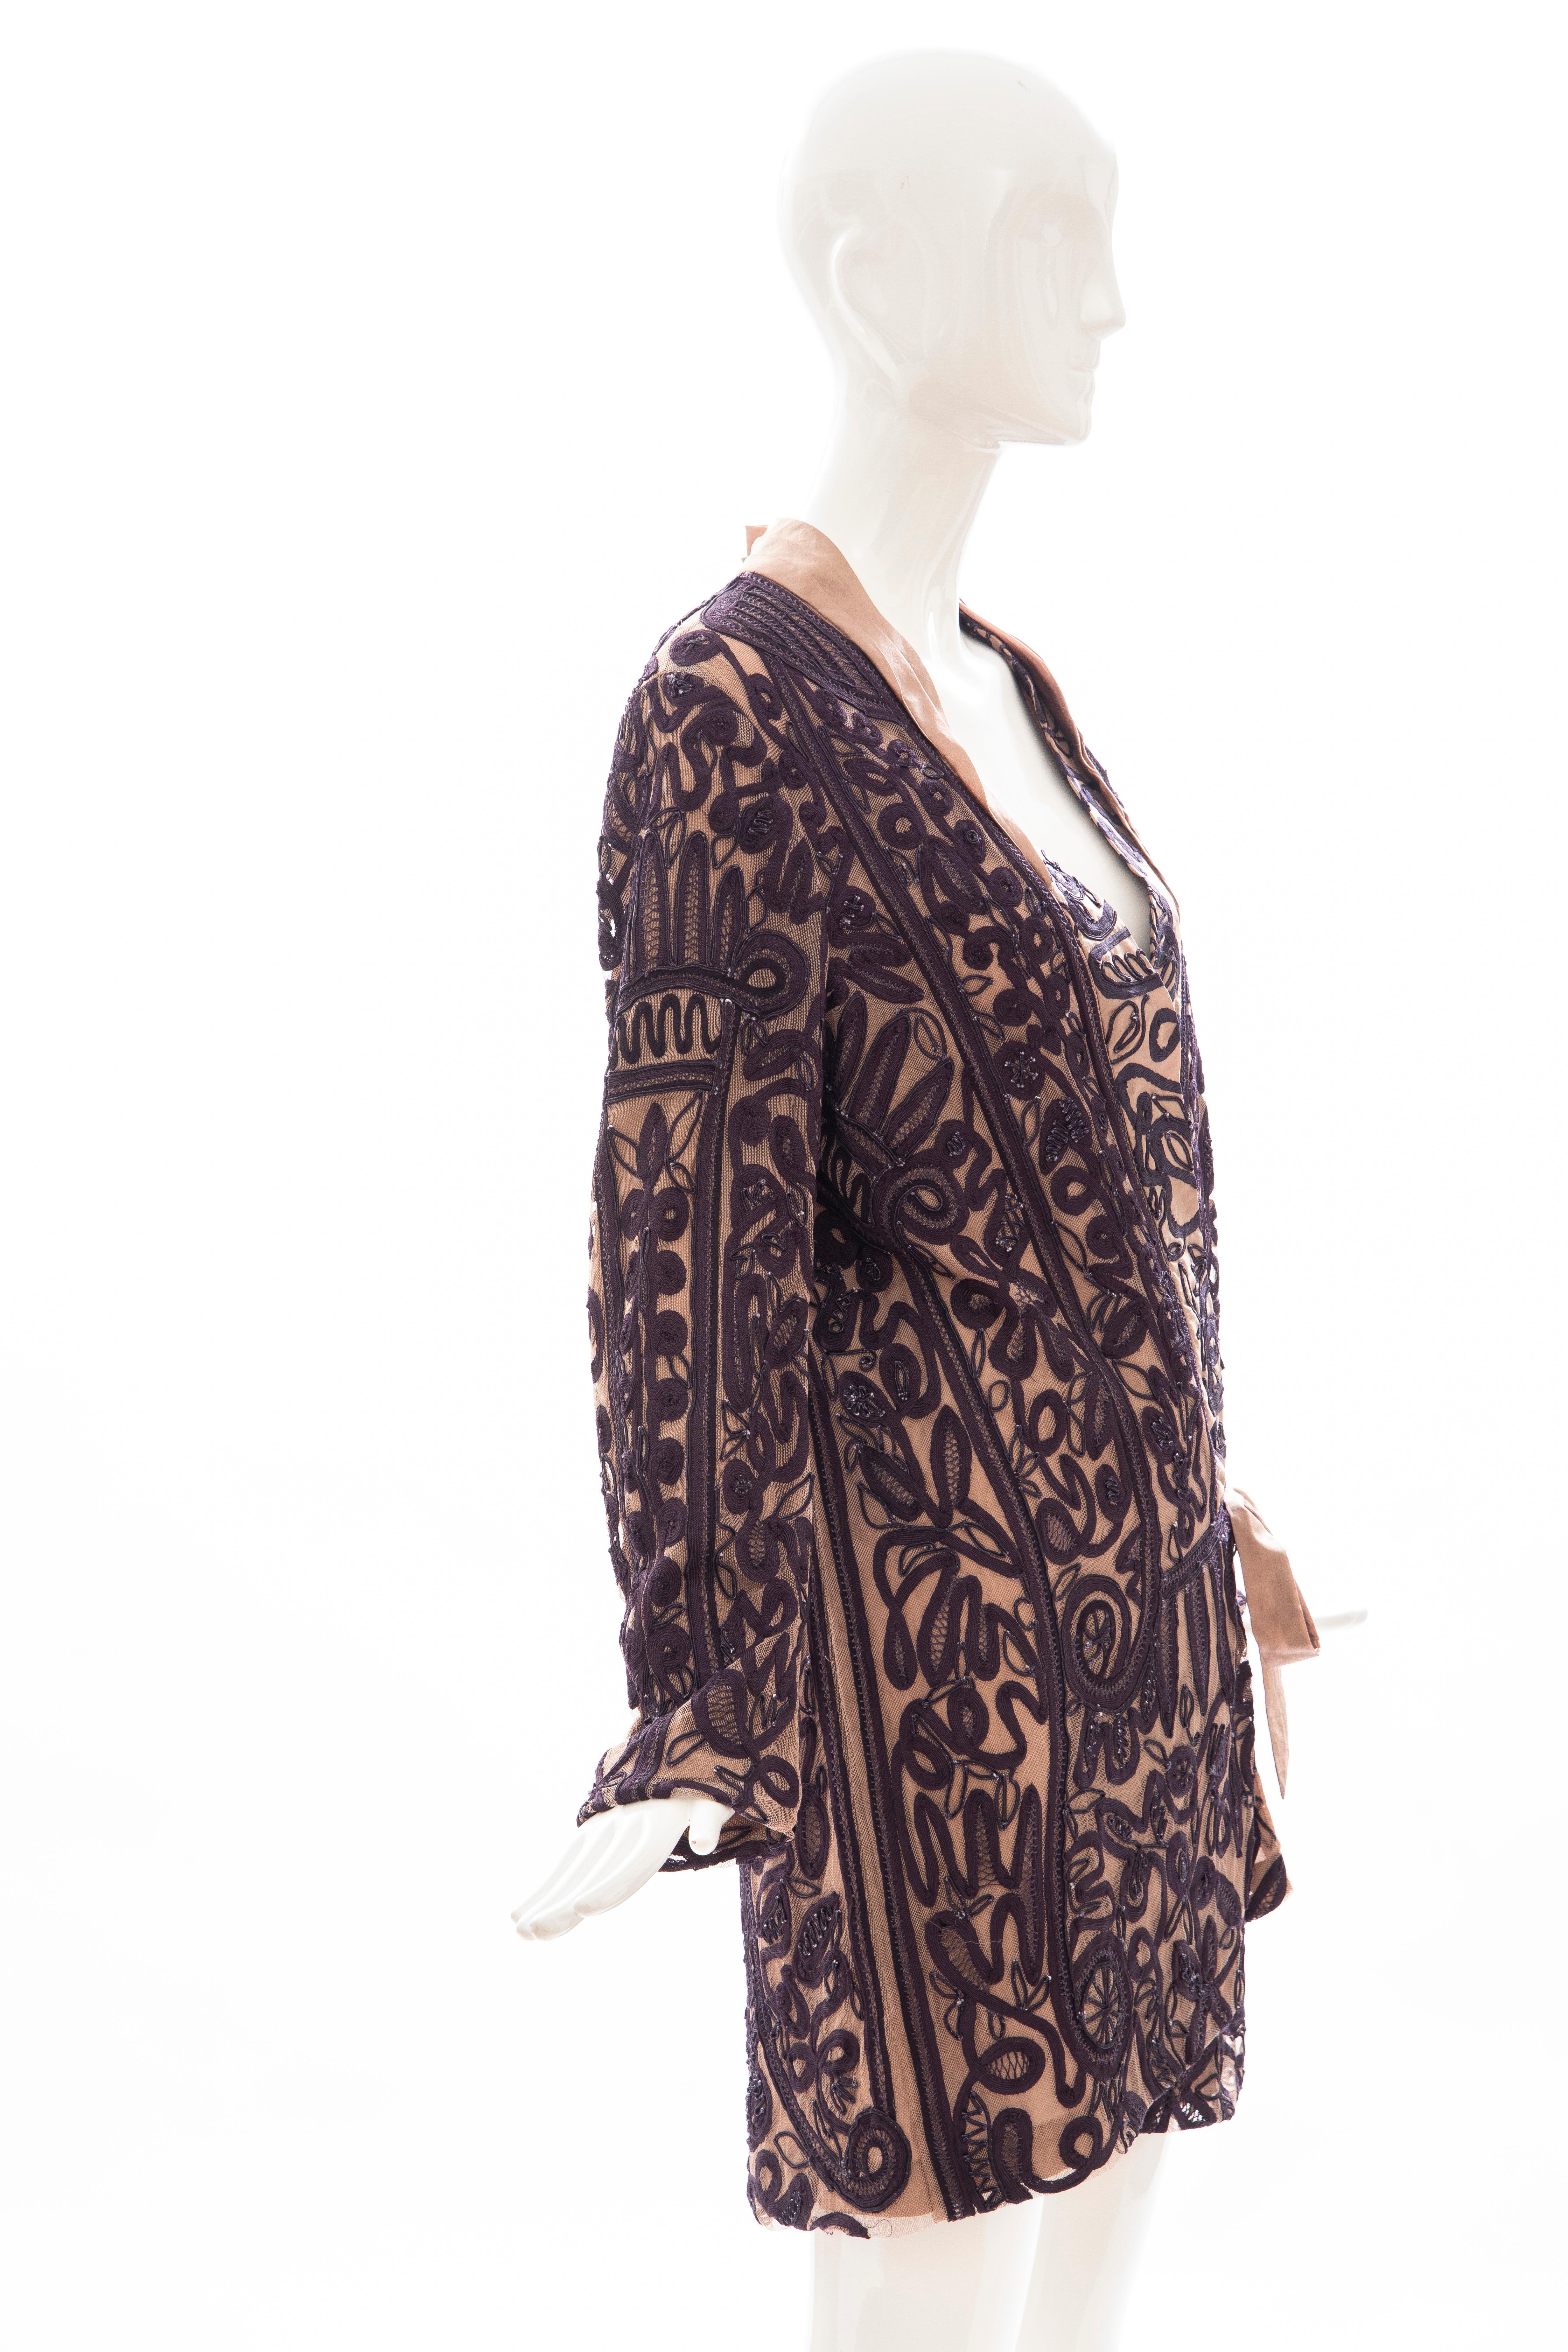 Dries Van Noten Silk Ribbon Embroidered Kimono Jacket In Good Condition For Sale In Cincinnati, OH